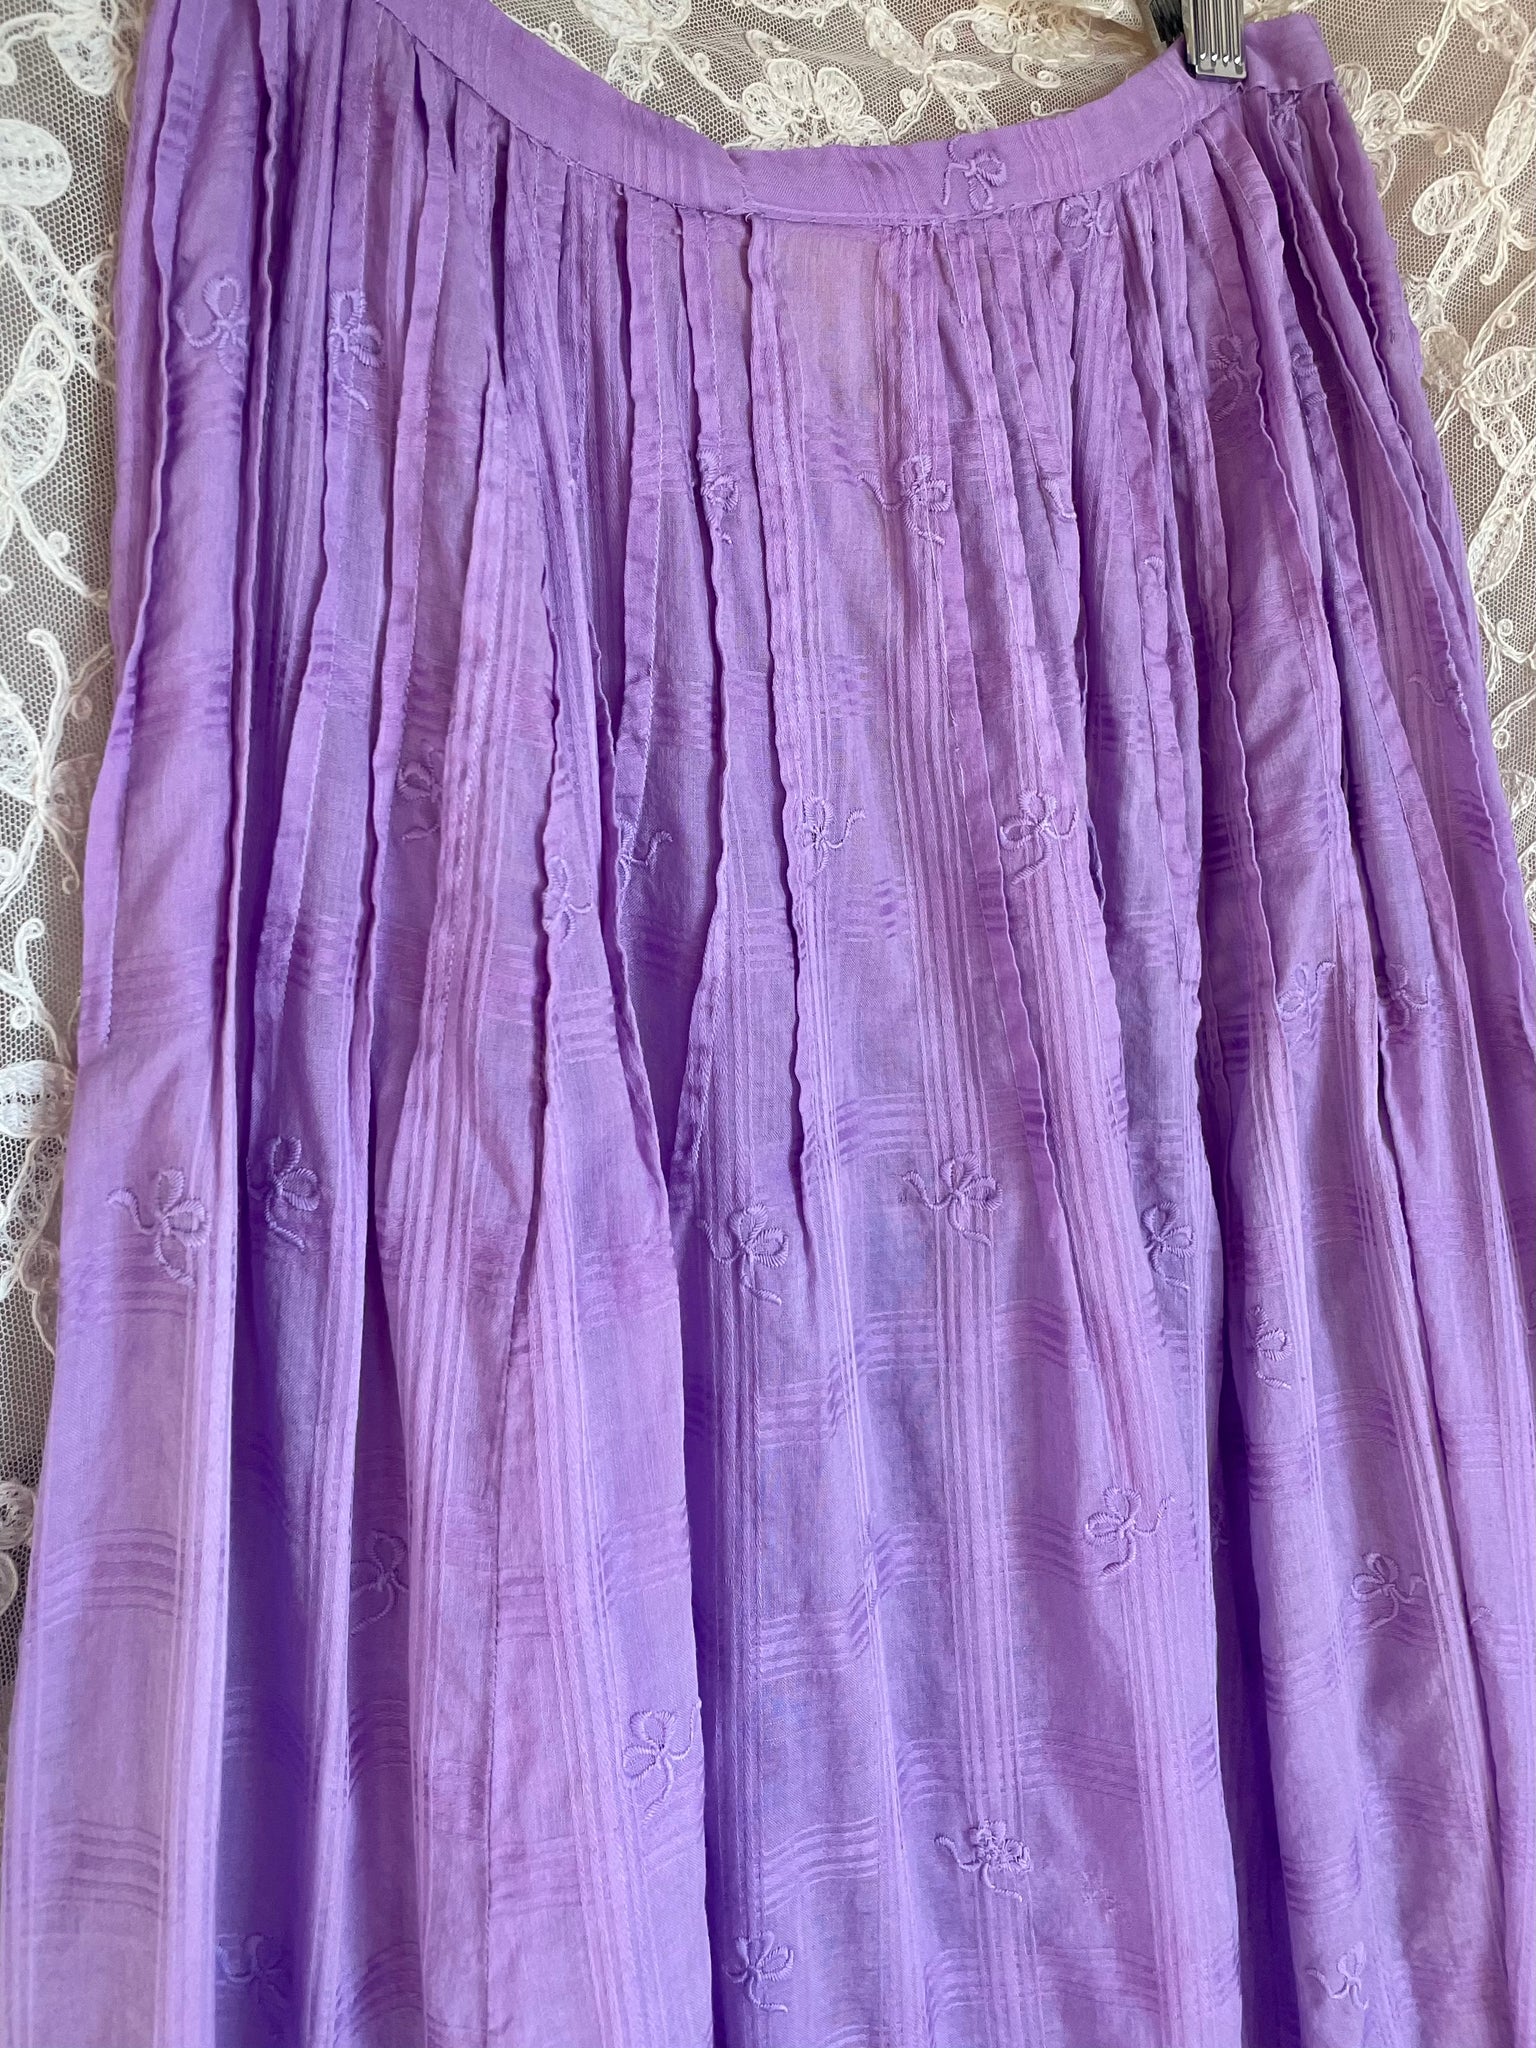 1900s Bow Emboridered Cotton Skirt Petticoat Hand Dyed Purple